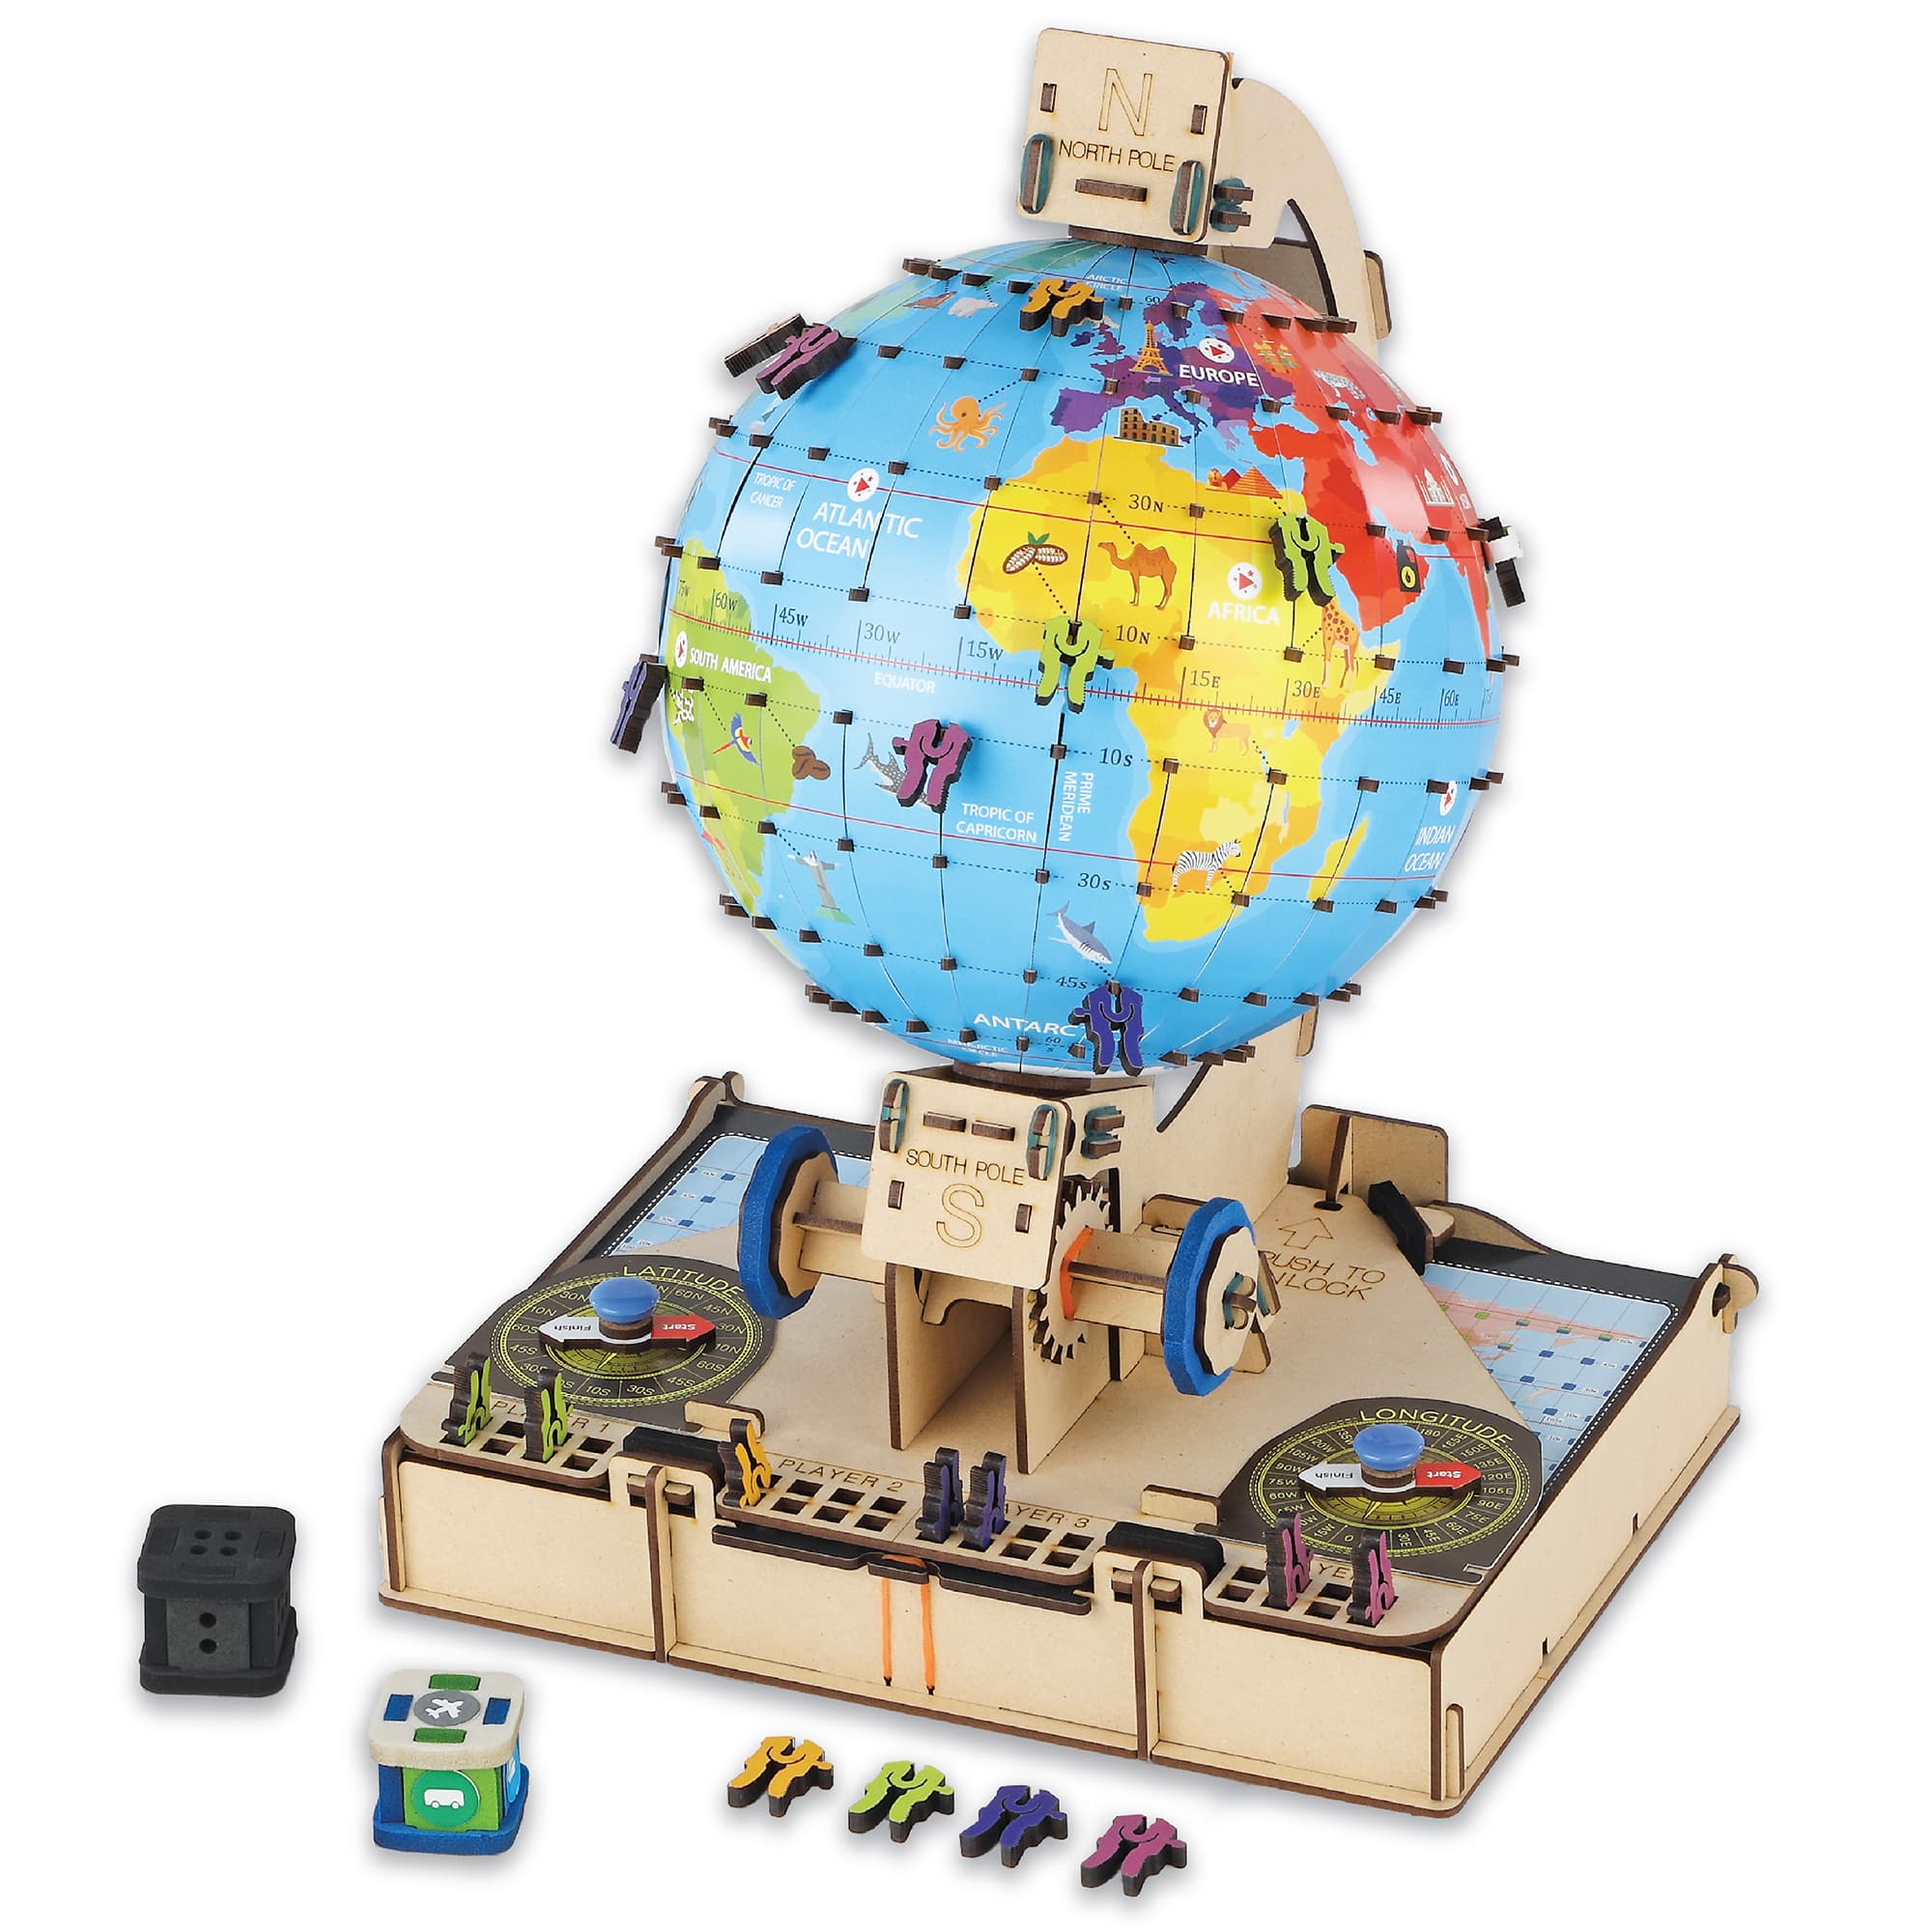 Elenco&#xAE; Smartivity&#xAE; Globe Explorer Wooden Model Engineering STEM Learning Toy